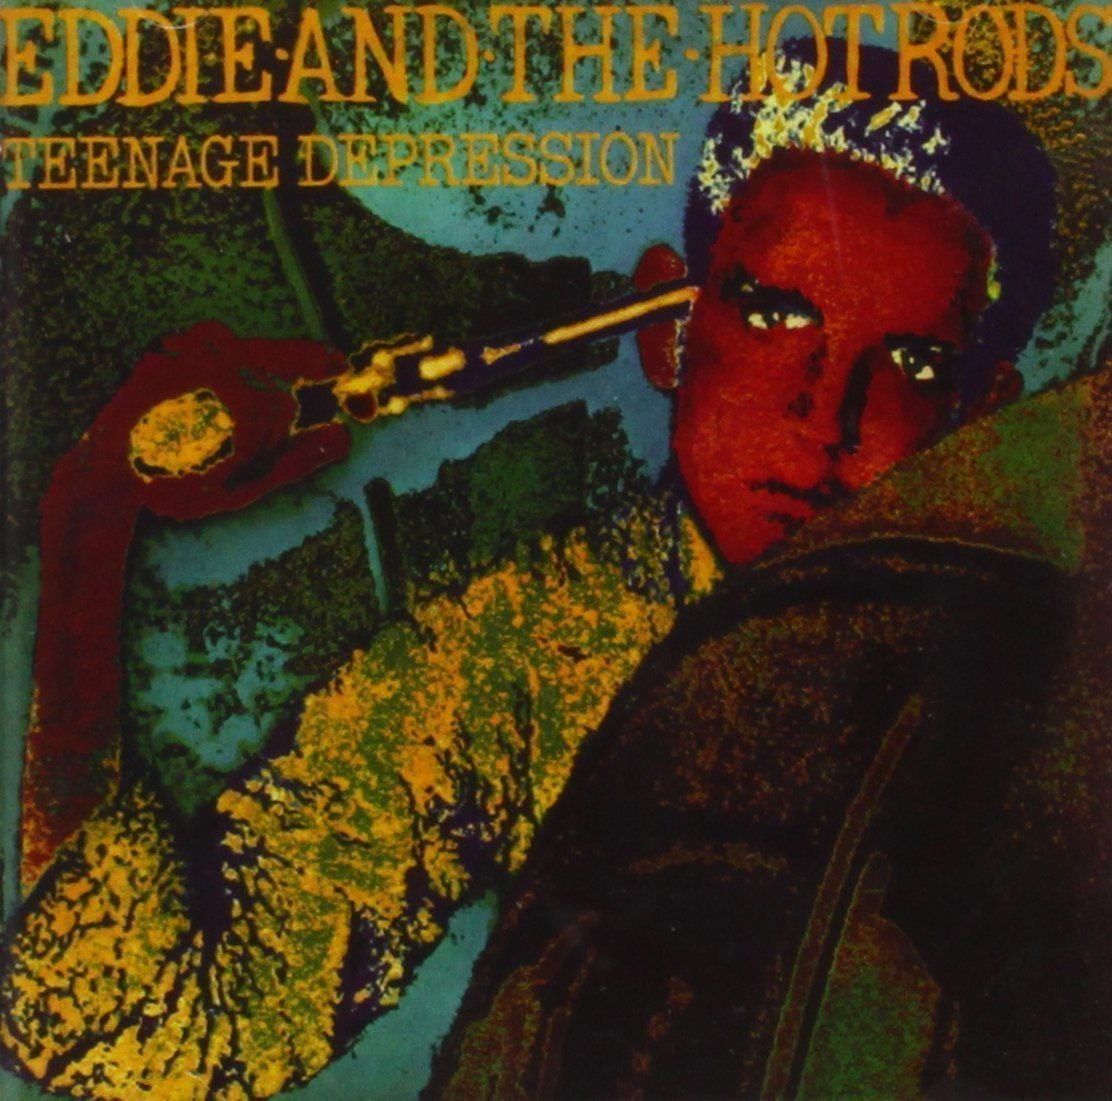 Vinyl Record Eddie And The Hot Rods - Teenage Depression (LP)